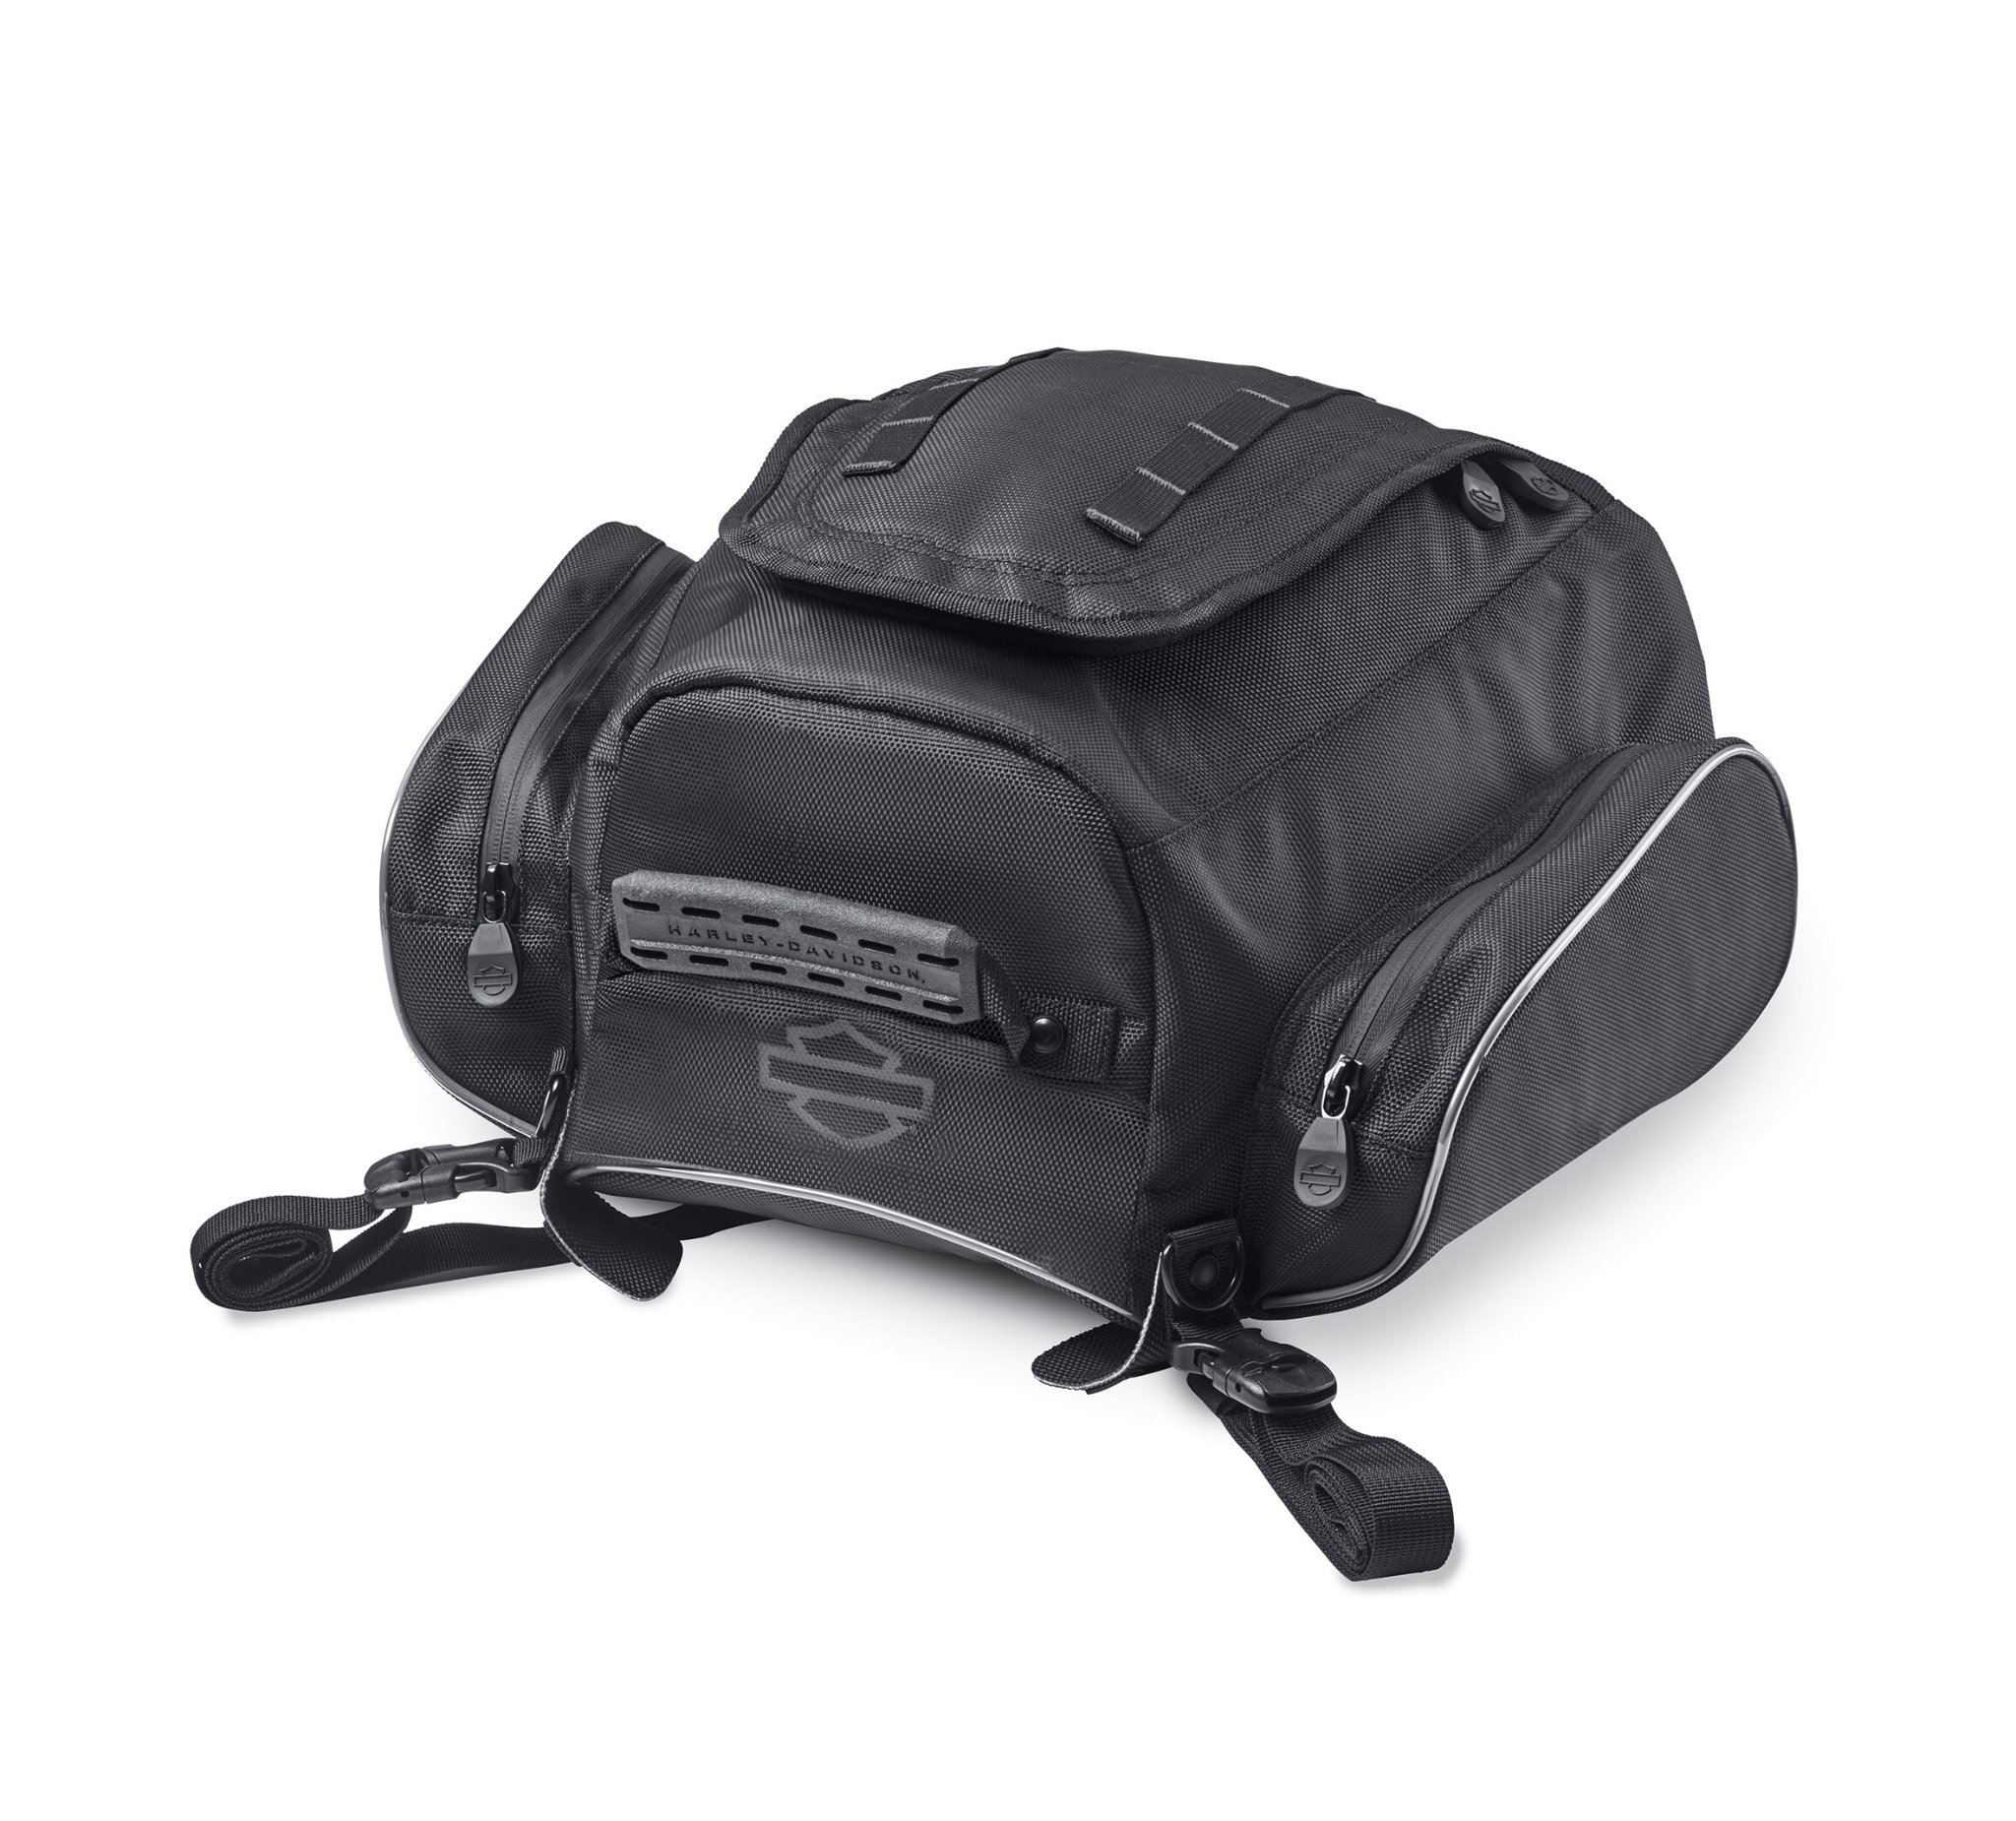 Harley Davidson Barrel Purse Black Leather Handbag Detachable Strap